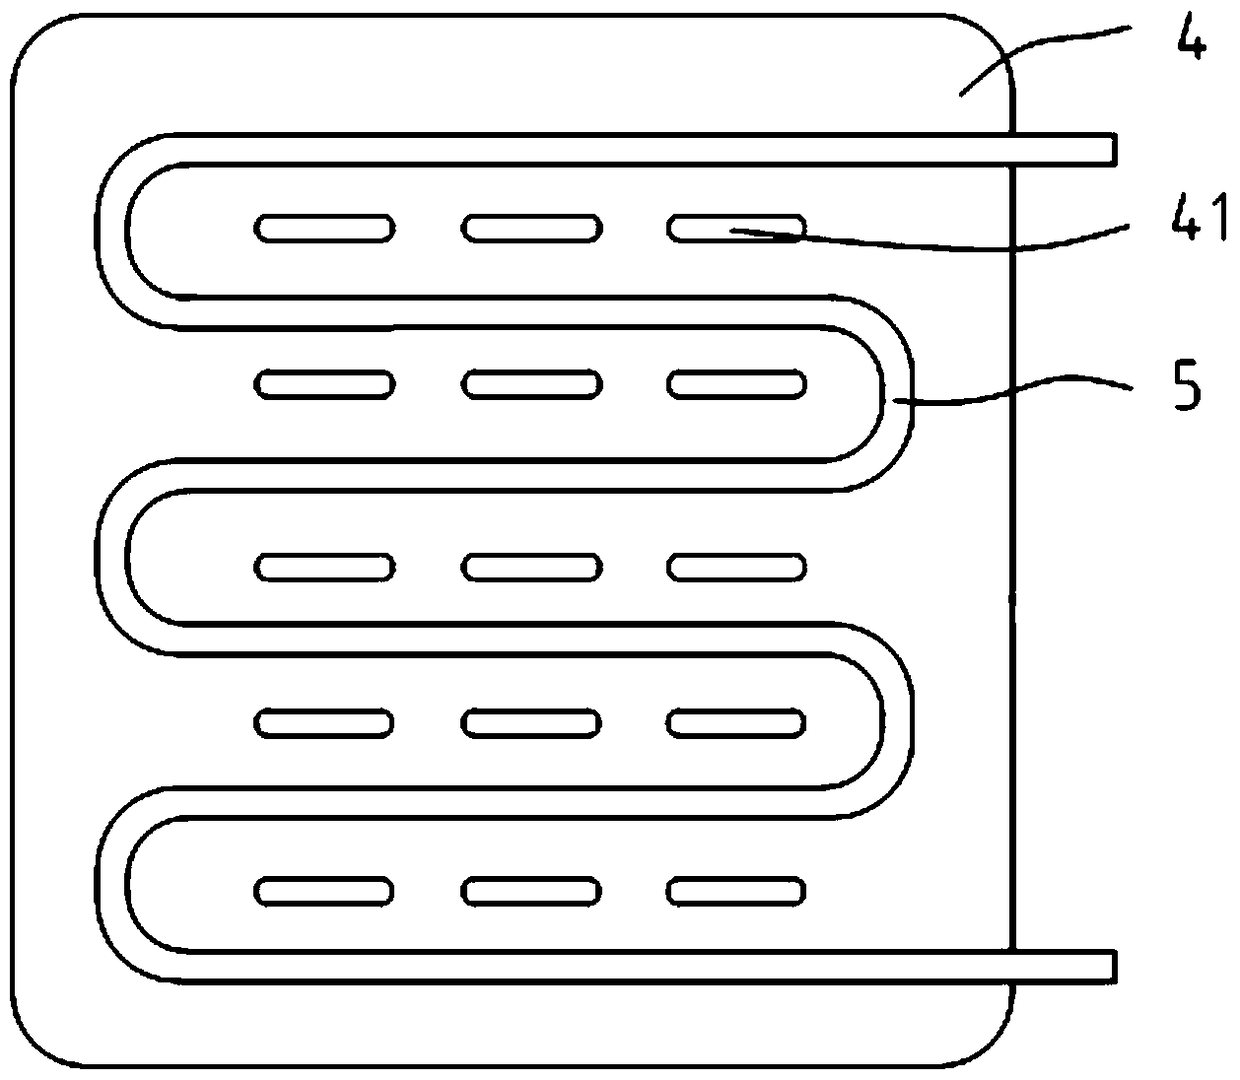 Evaporators and Refrigerators